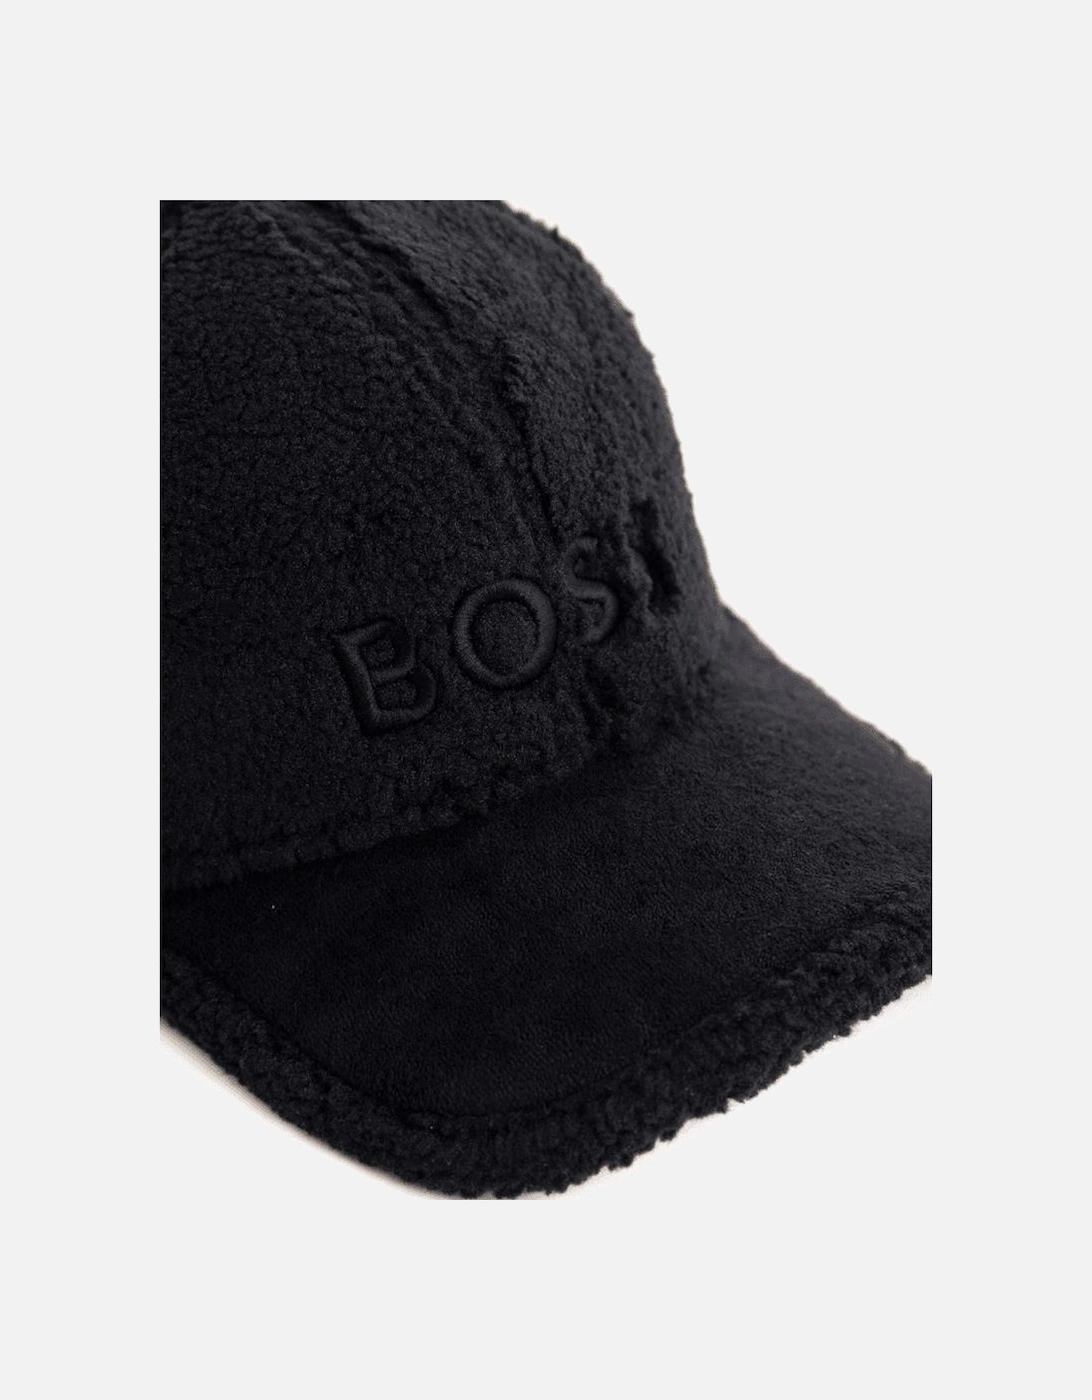 Eli Embroidered Logo Black Cap